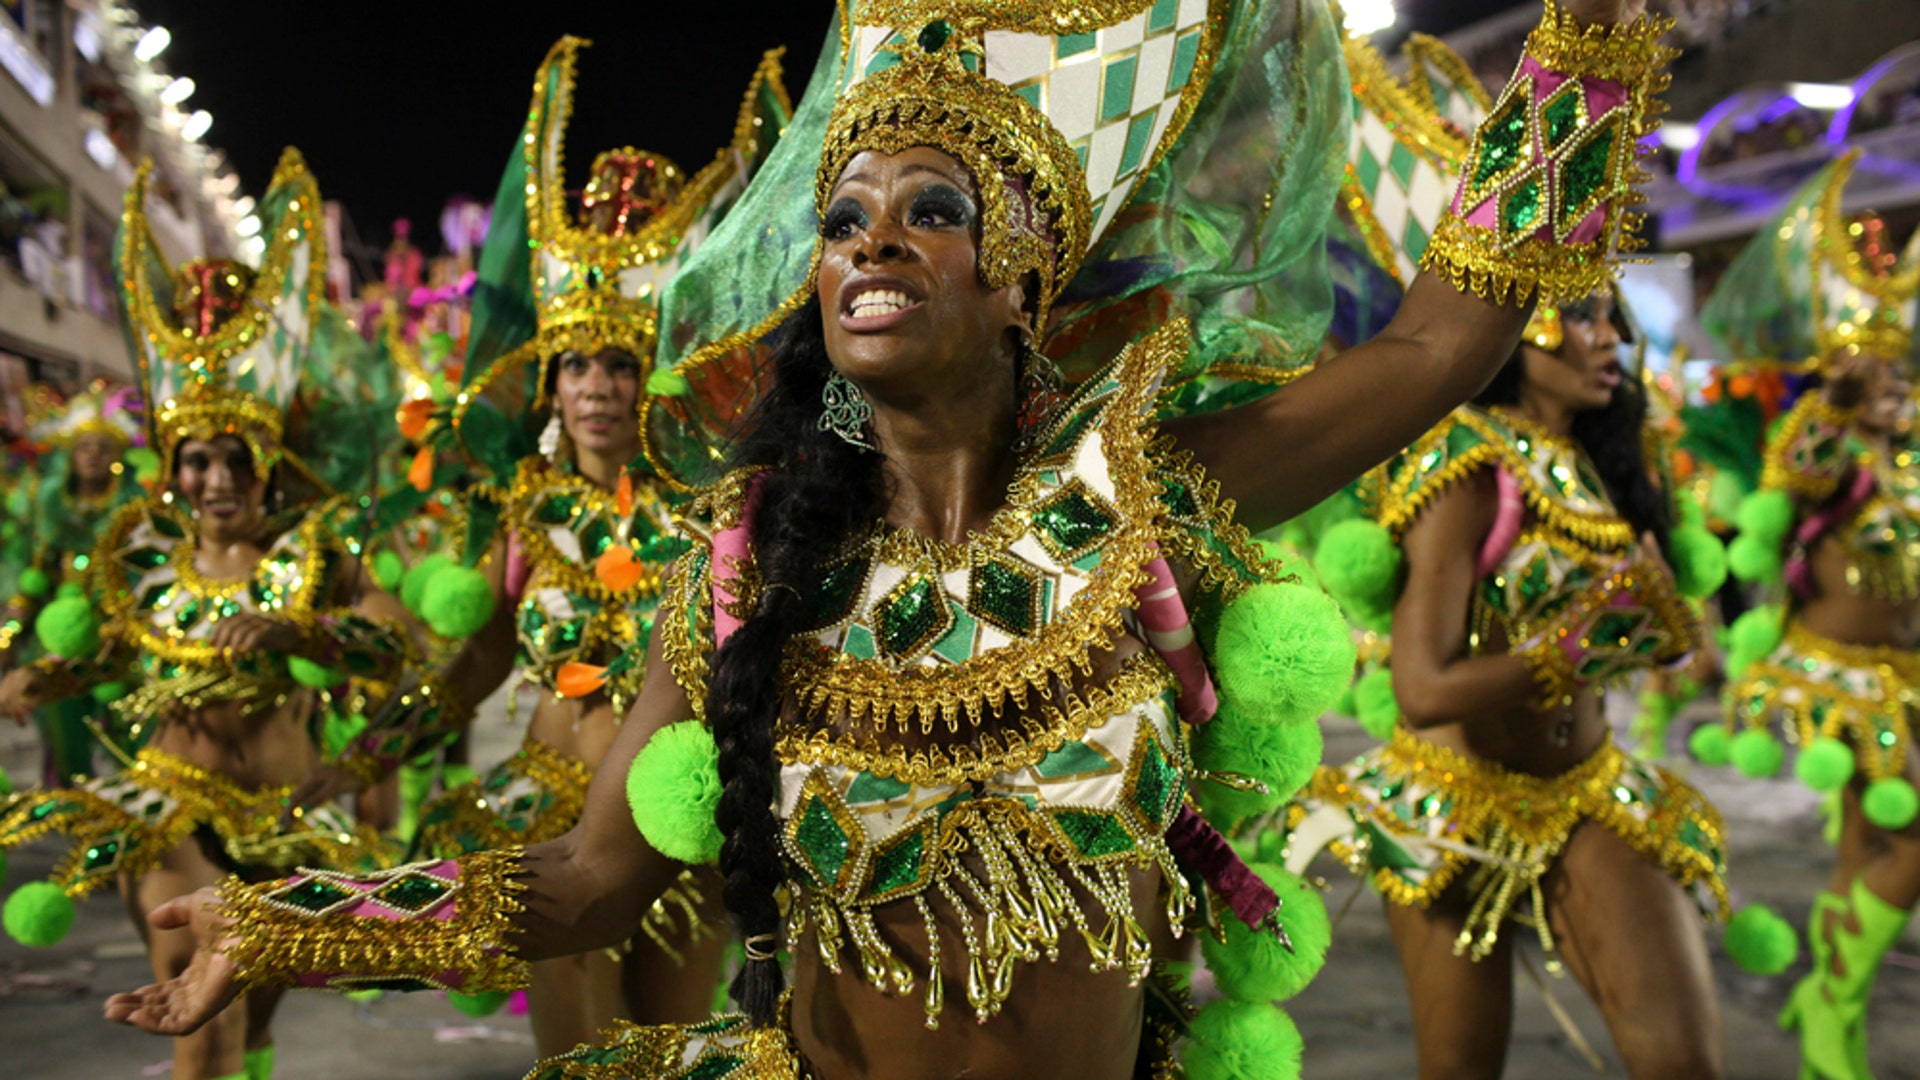 Звезды карнавала. Карнавал в Рио-де-Жанейро. Карнавал в Рио-де-Жанейро (бразильский карнавал). Бразильский карнавал Бразилия. Бразилия фестиваль Рио де Жанейро.